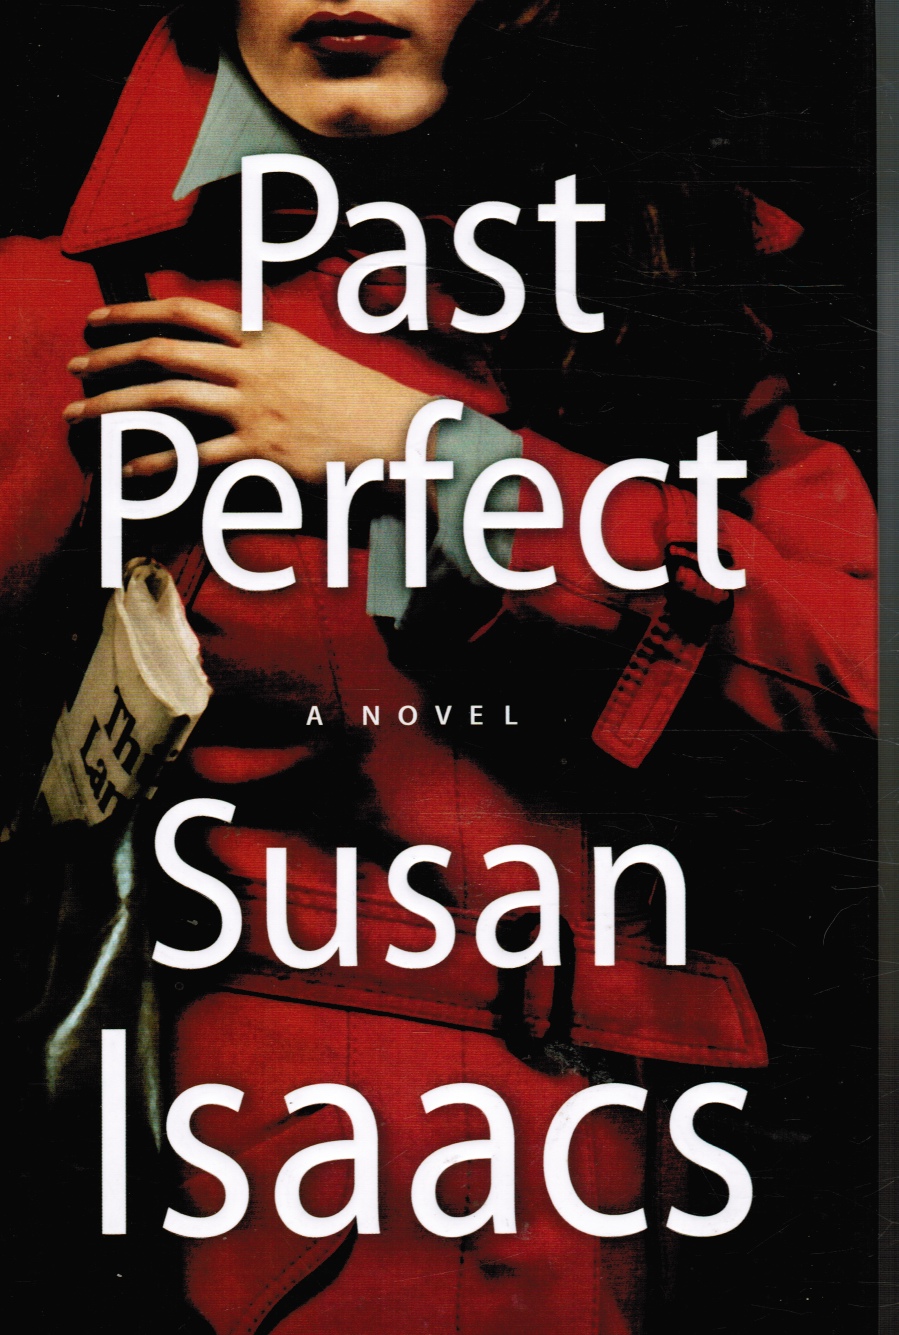 ISAACS, SUSAN - Past Perfect: A Novel